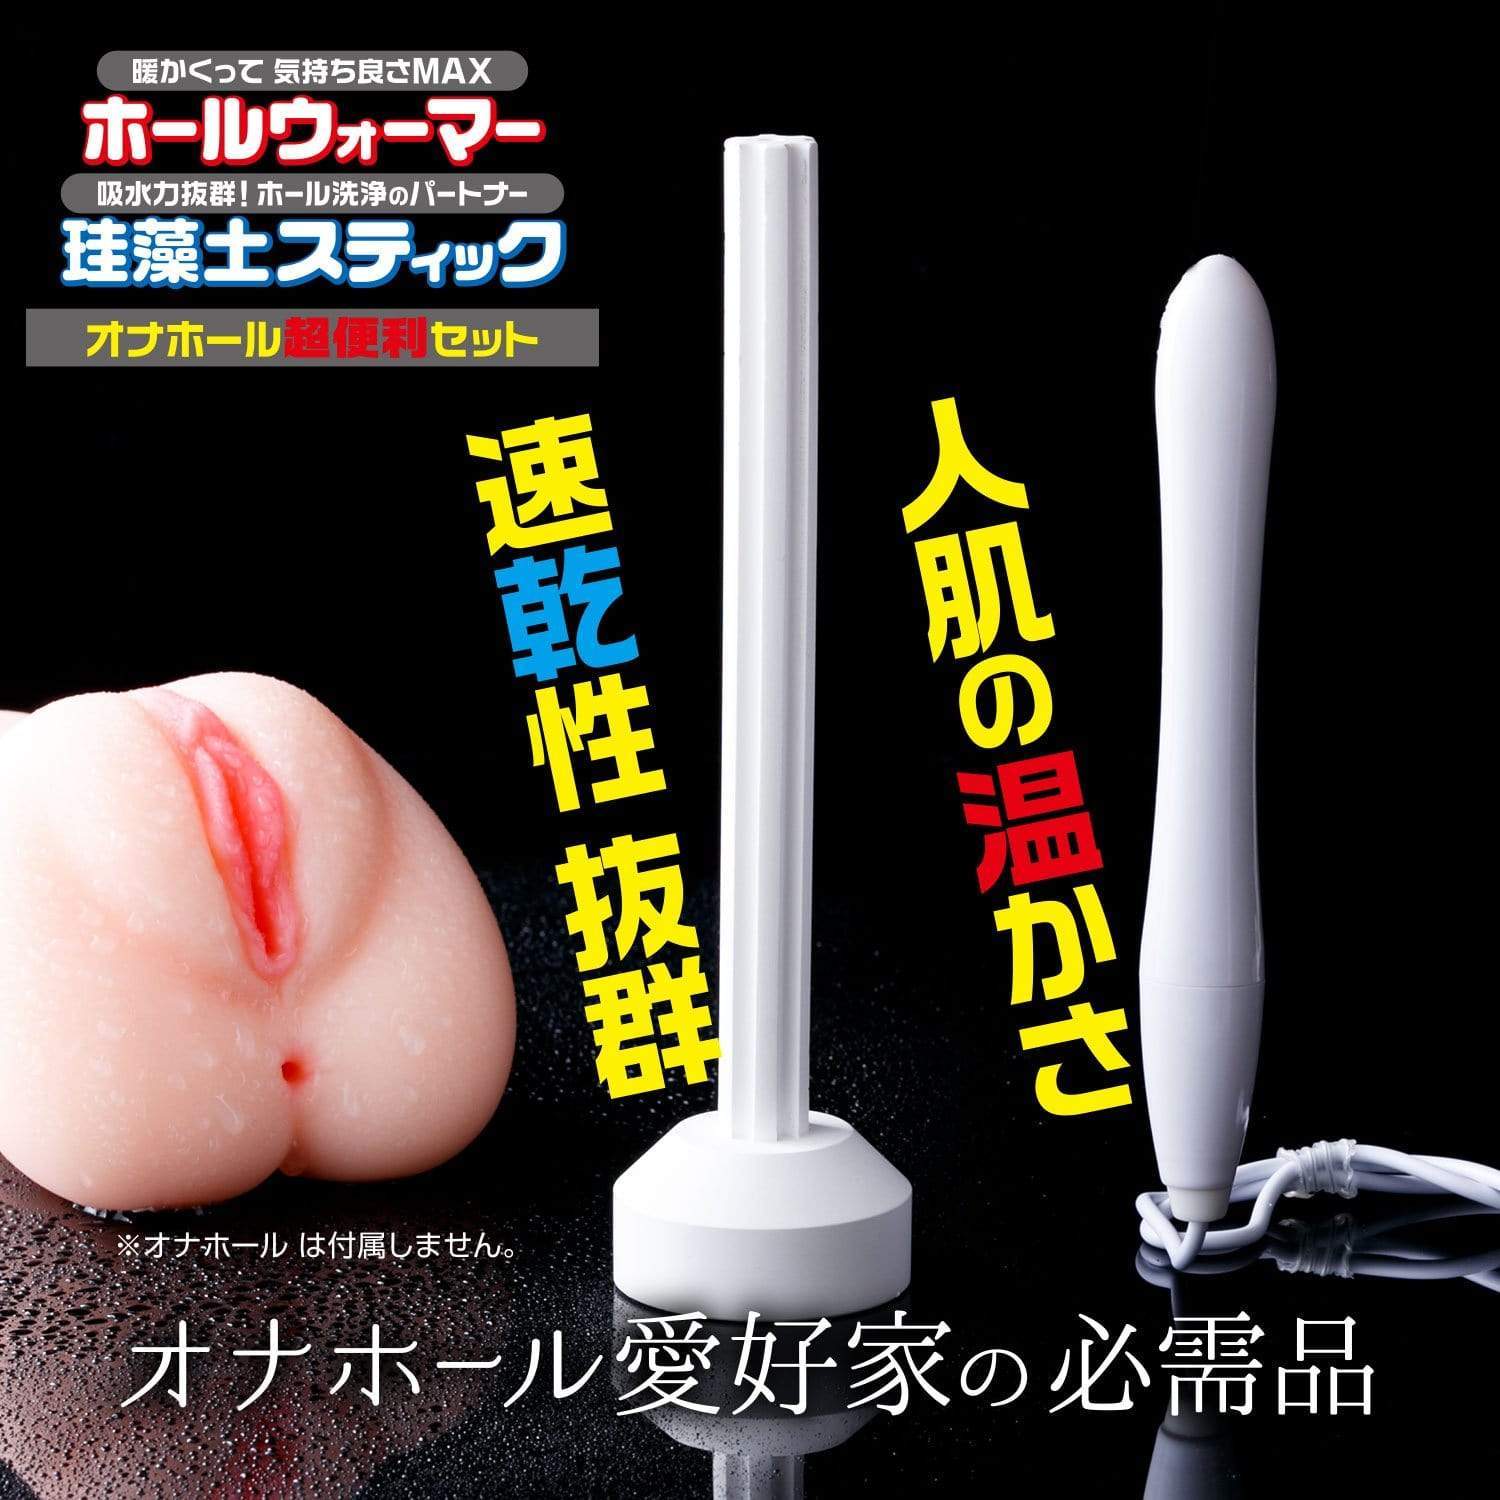 Fuji World - Onahoru Hole Warmer and Keisoudo Drying Stick Set (White) -  Warmer  Durio.sg